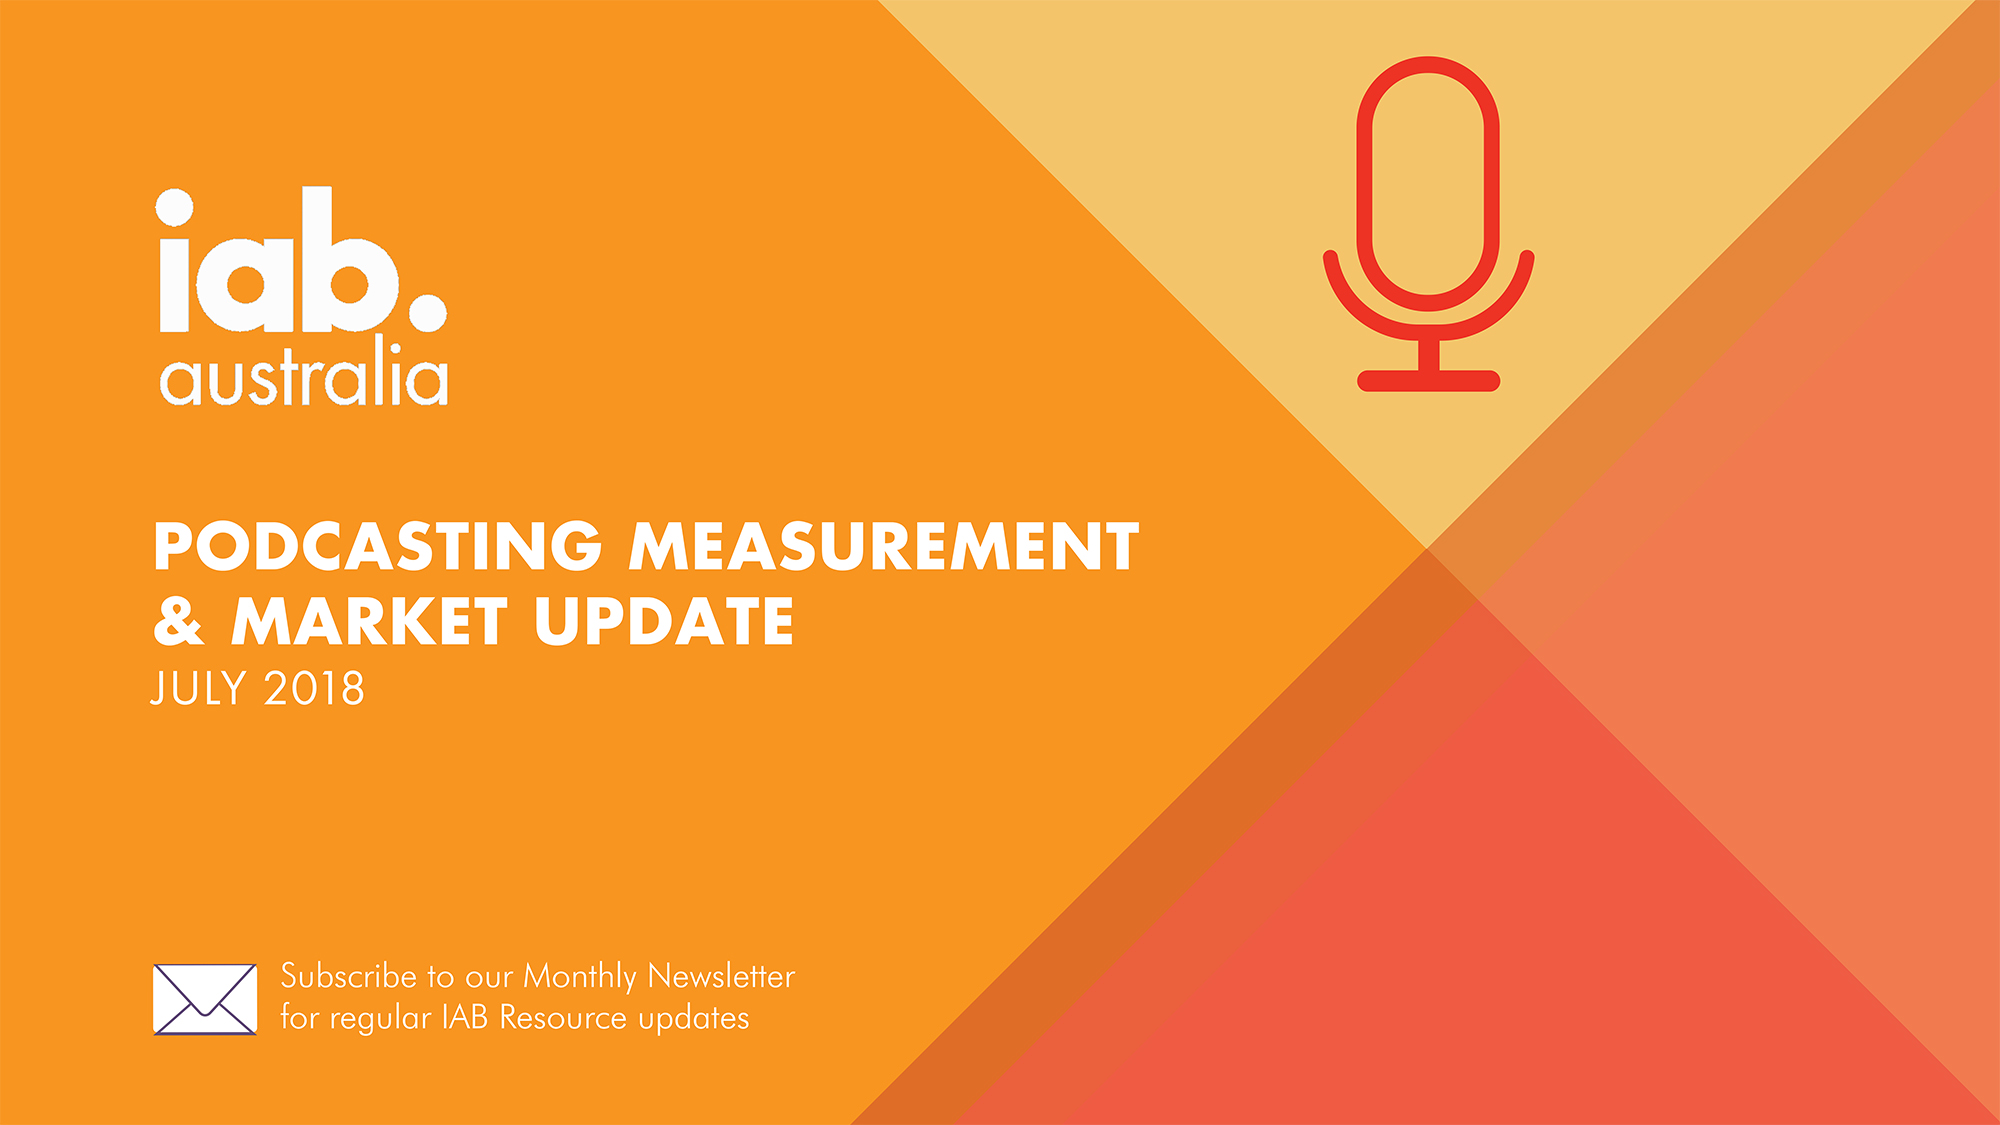 IAB Podcasting Measurement Guidance and Local Market Update - July 2018 -  IAB Australia